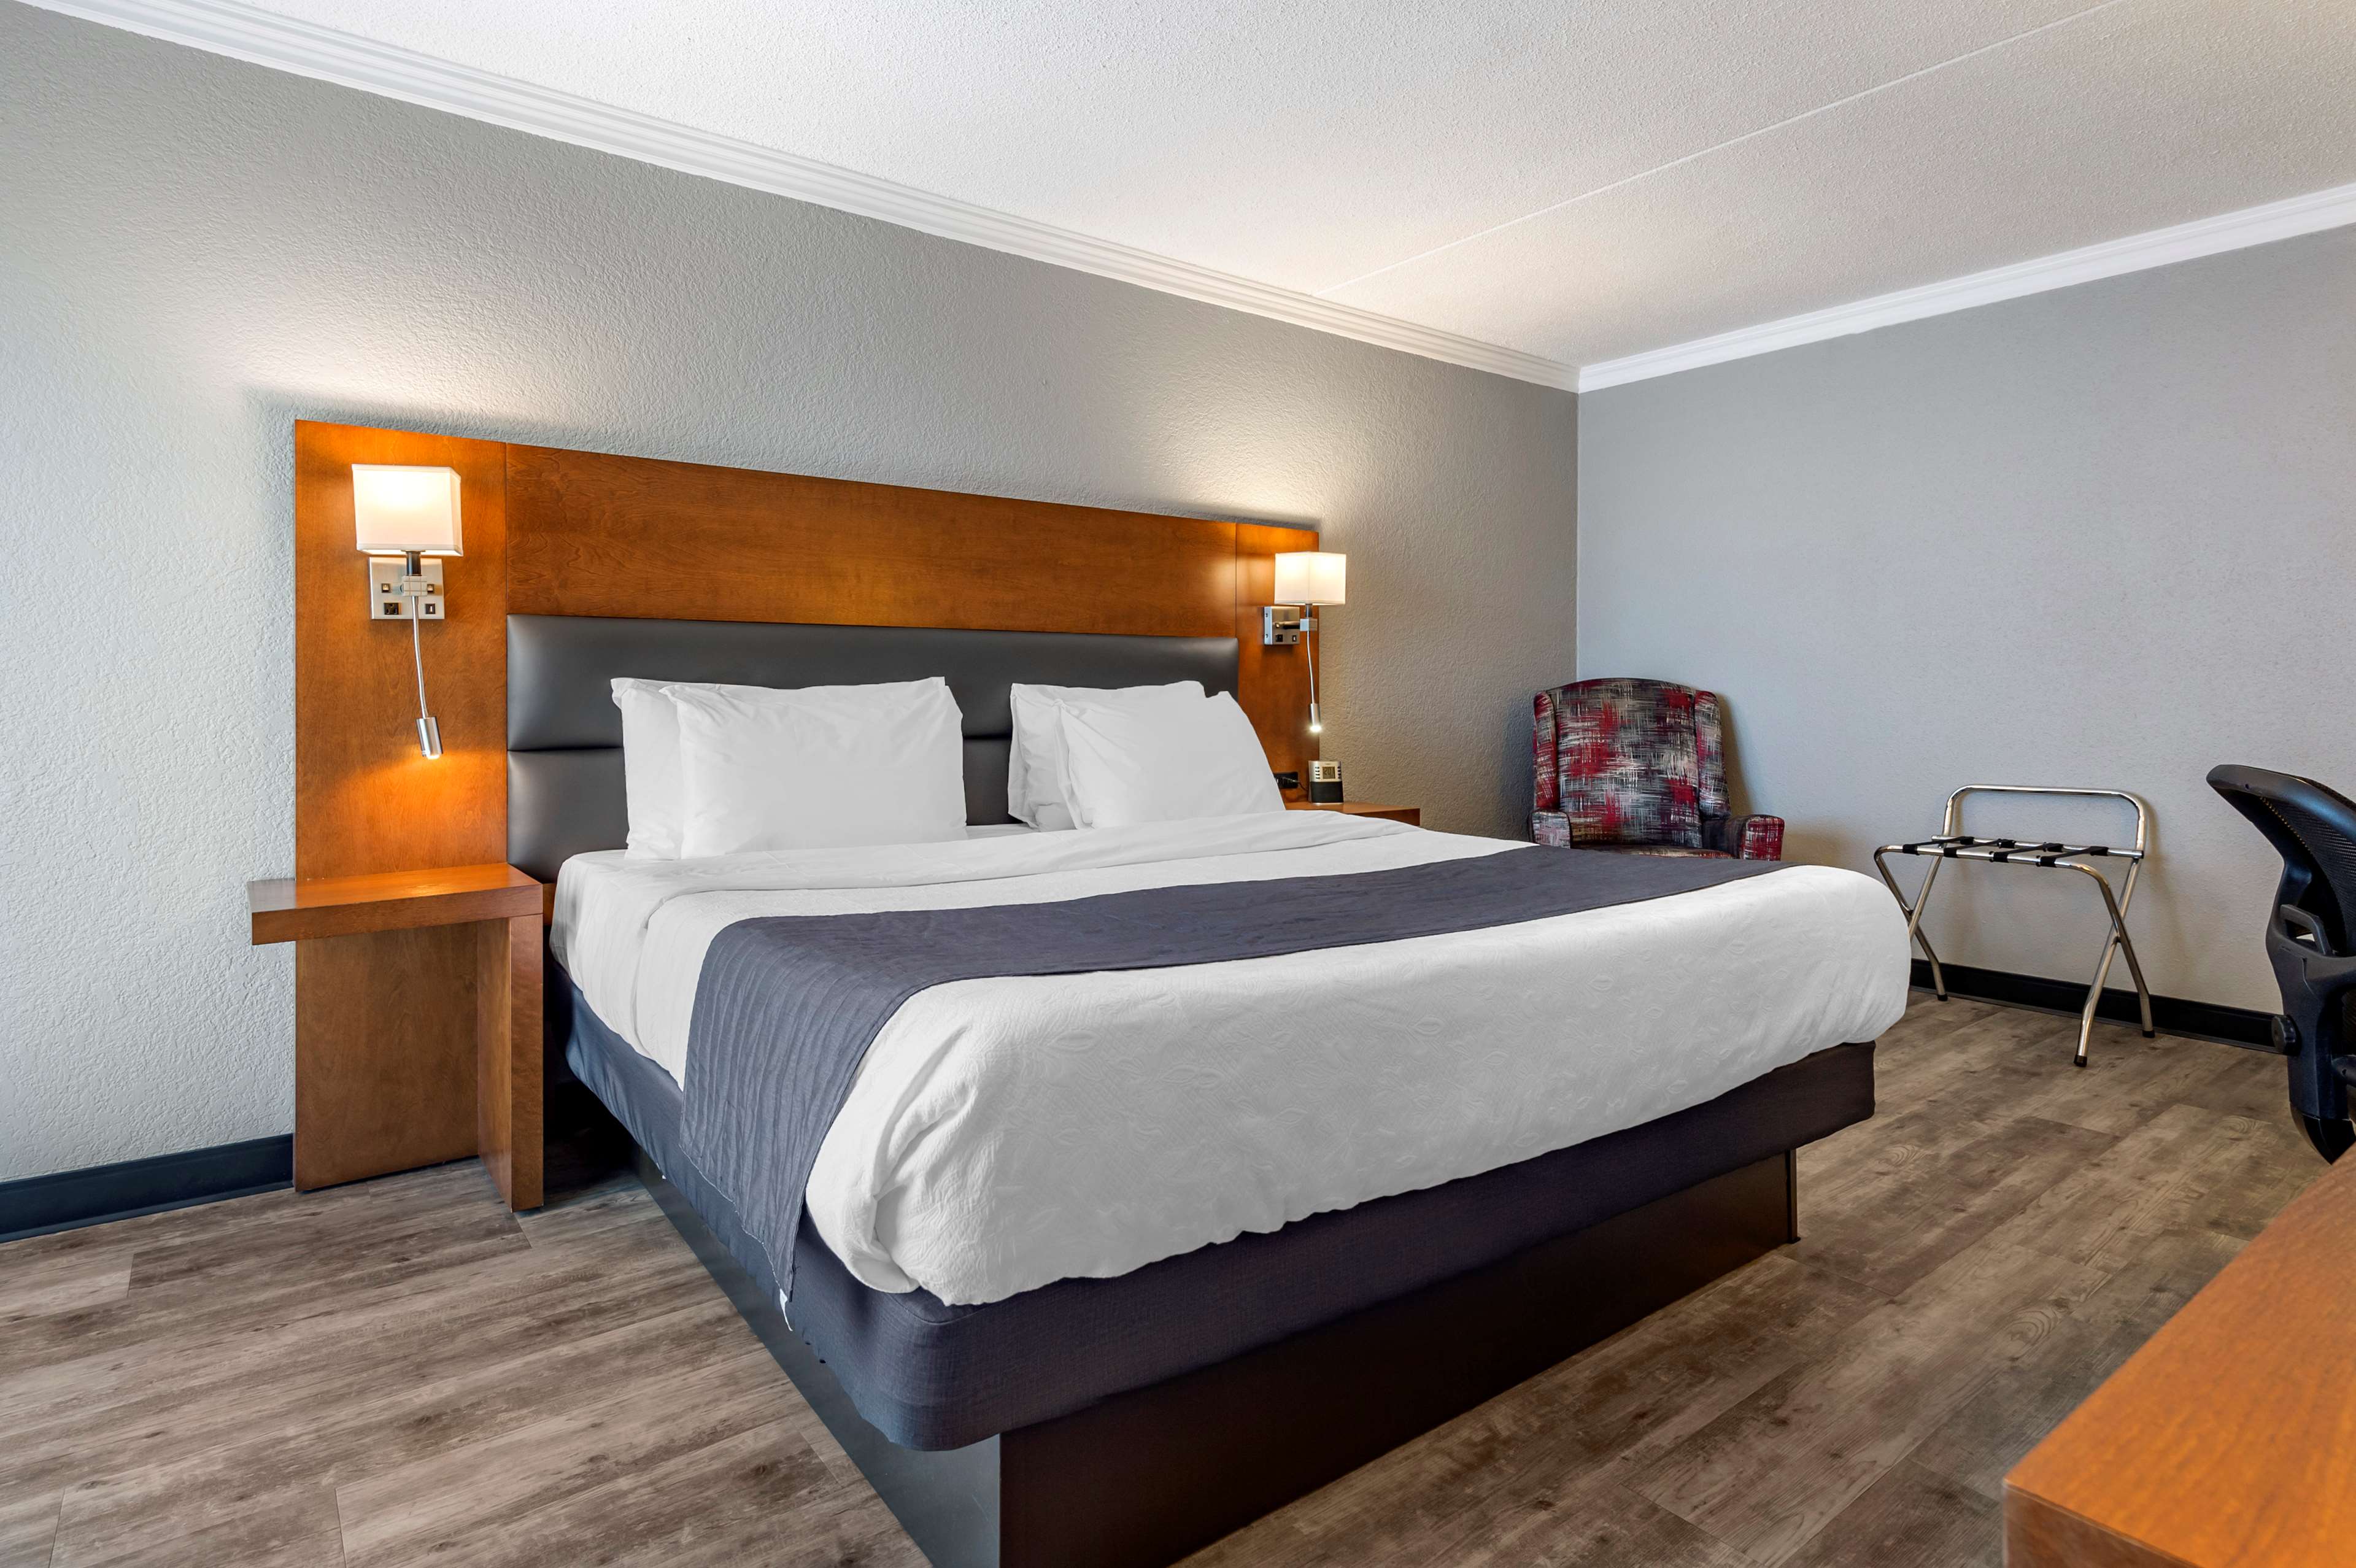 Guest Room Best Western Hotel Universel Drummondville Drummondville (819)478-4971